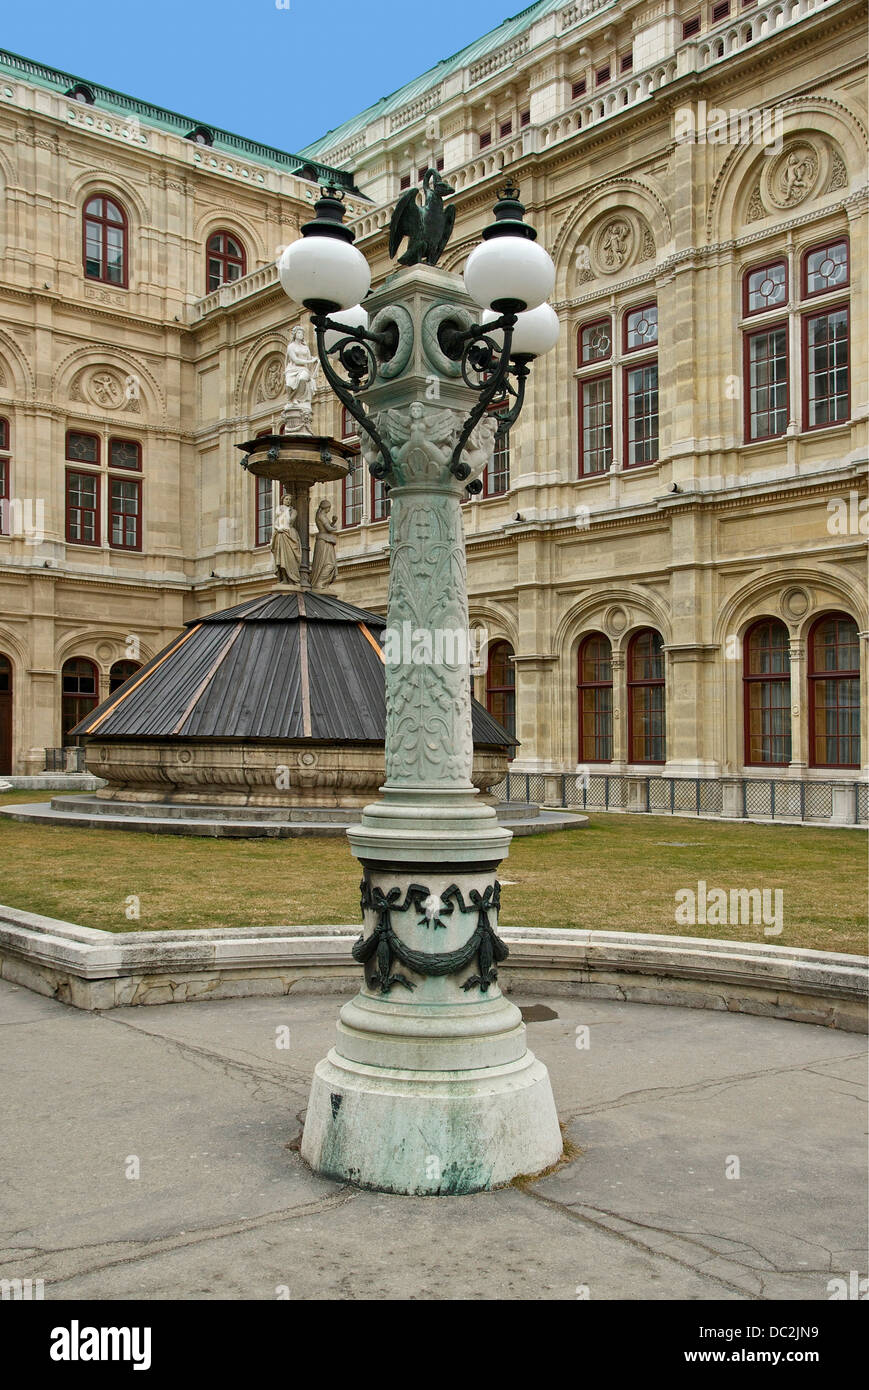 A street light, near the Staatsoper (State Opera), Vienna, Austria. Stock Photo